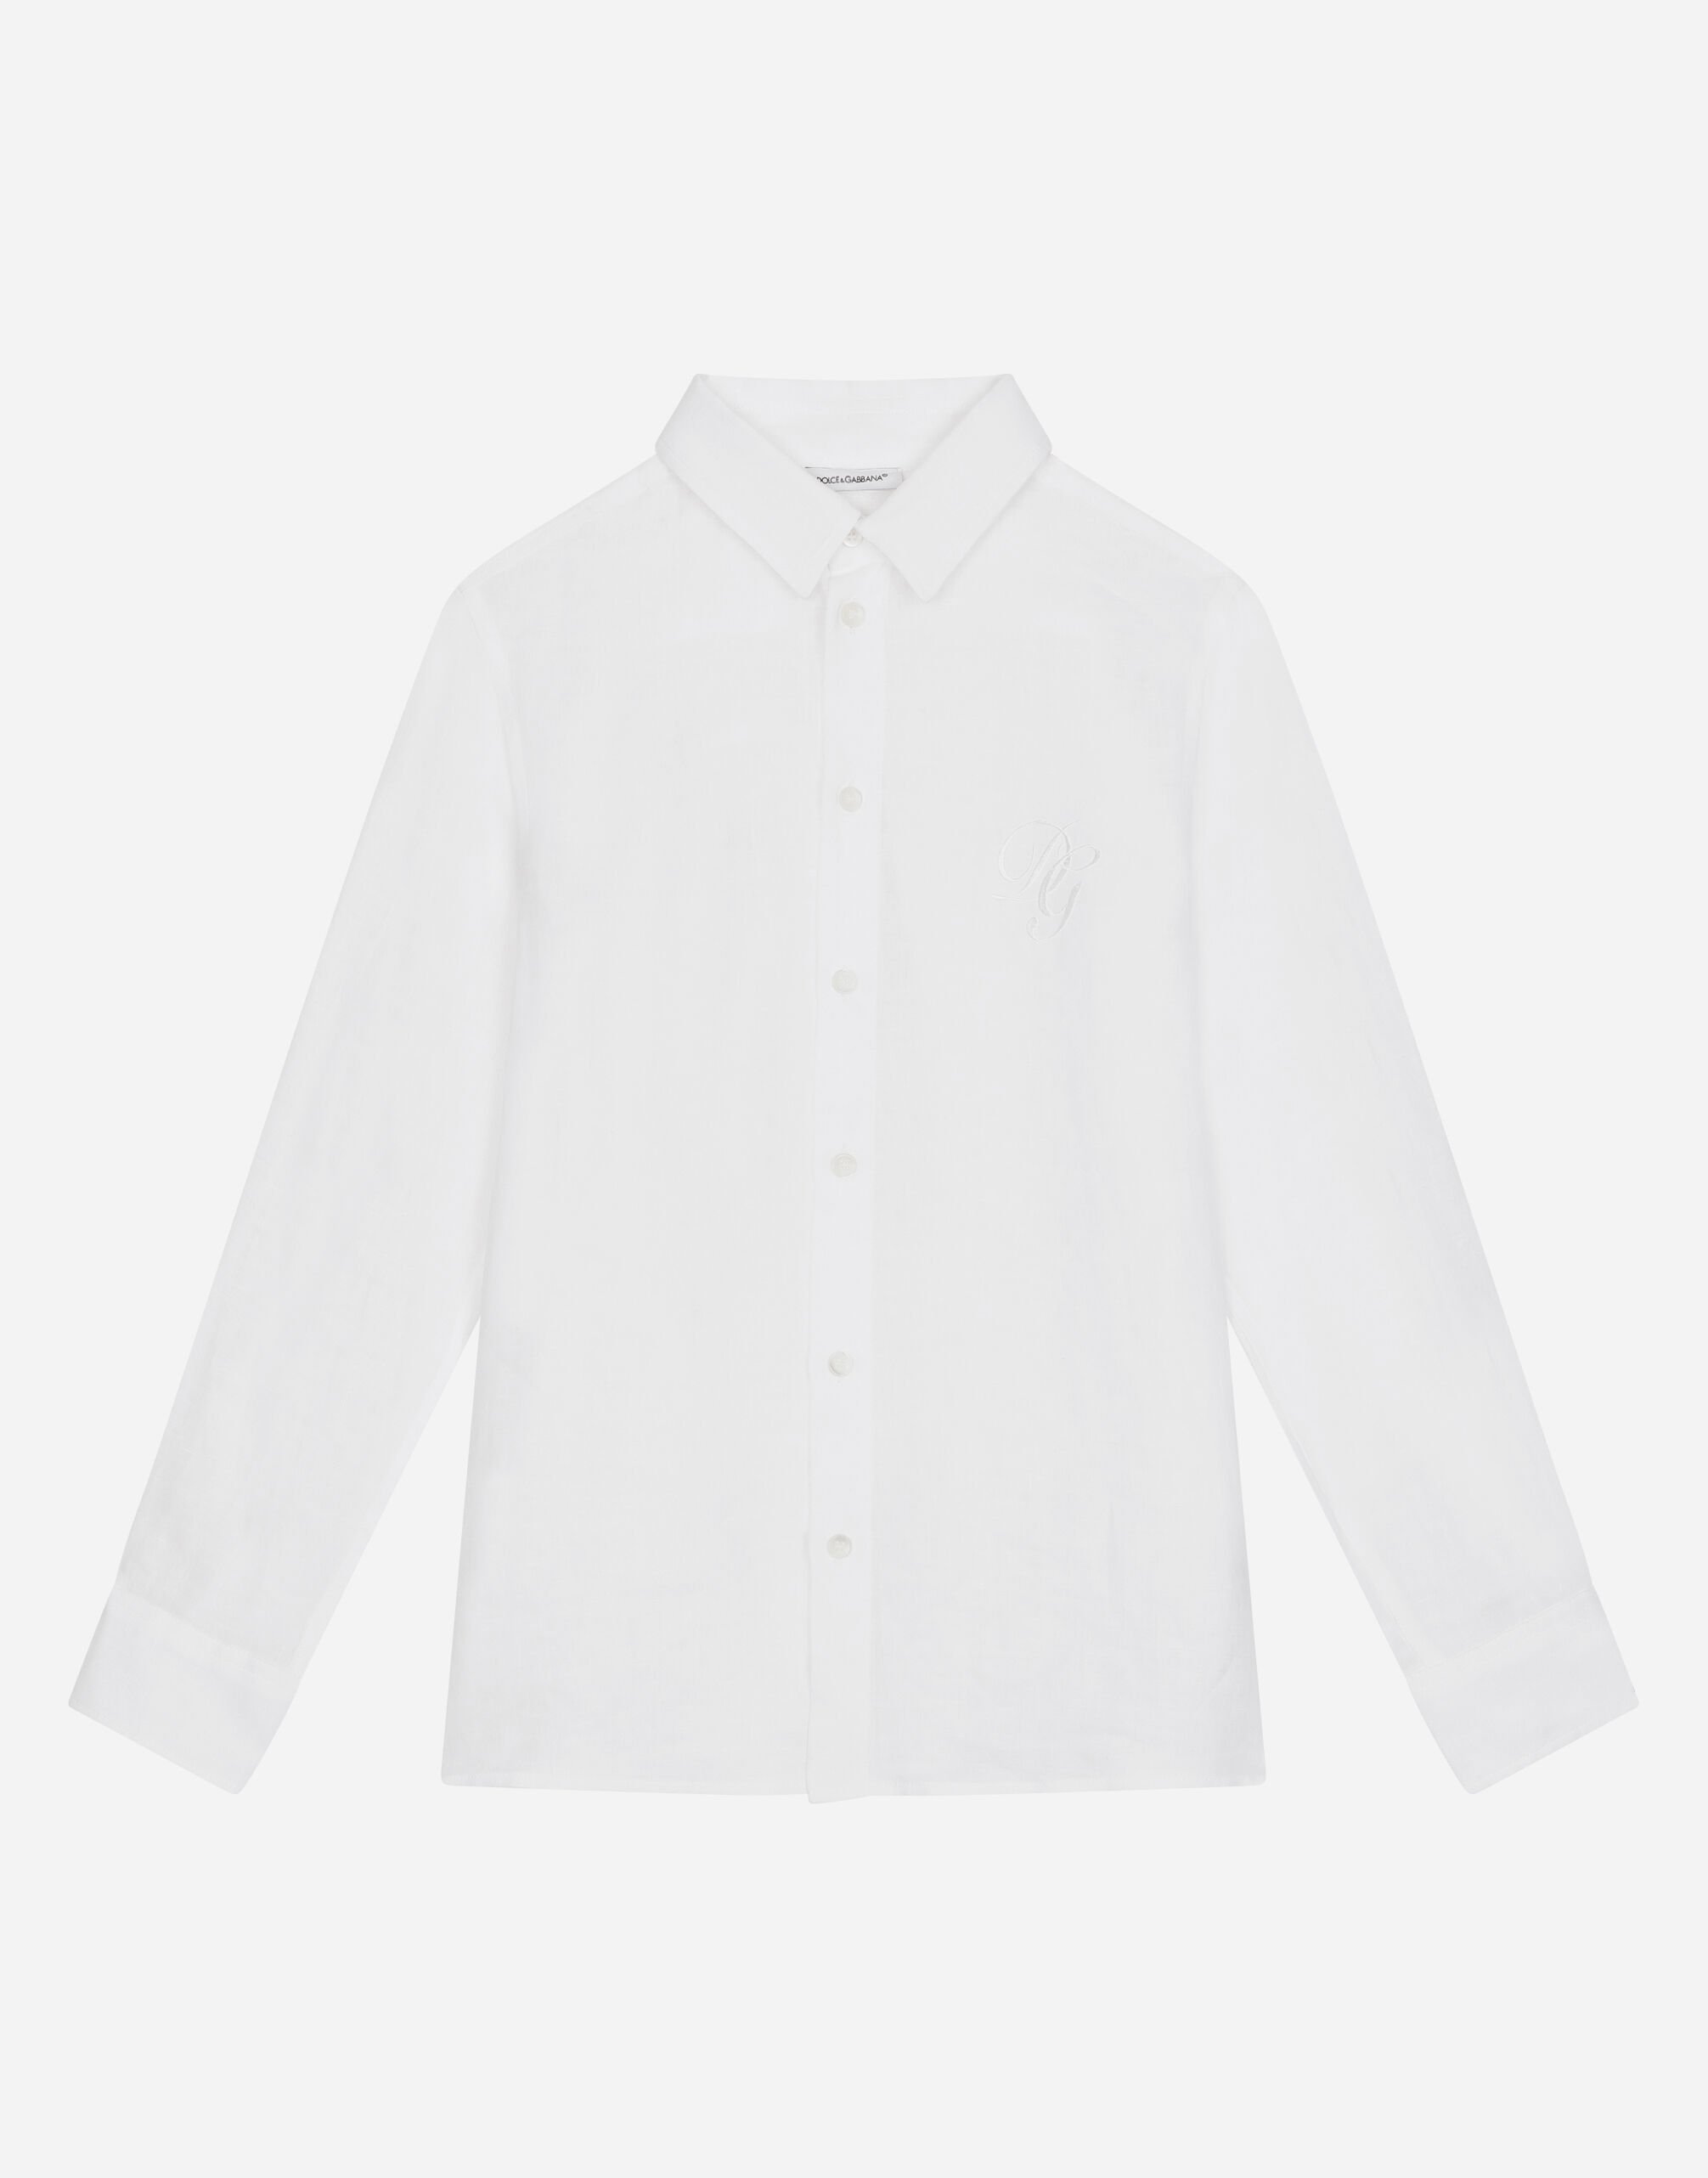 Dolce & Gabbana Linen shirt with DG embroidery Print L44S11HI1S6